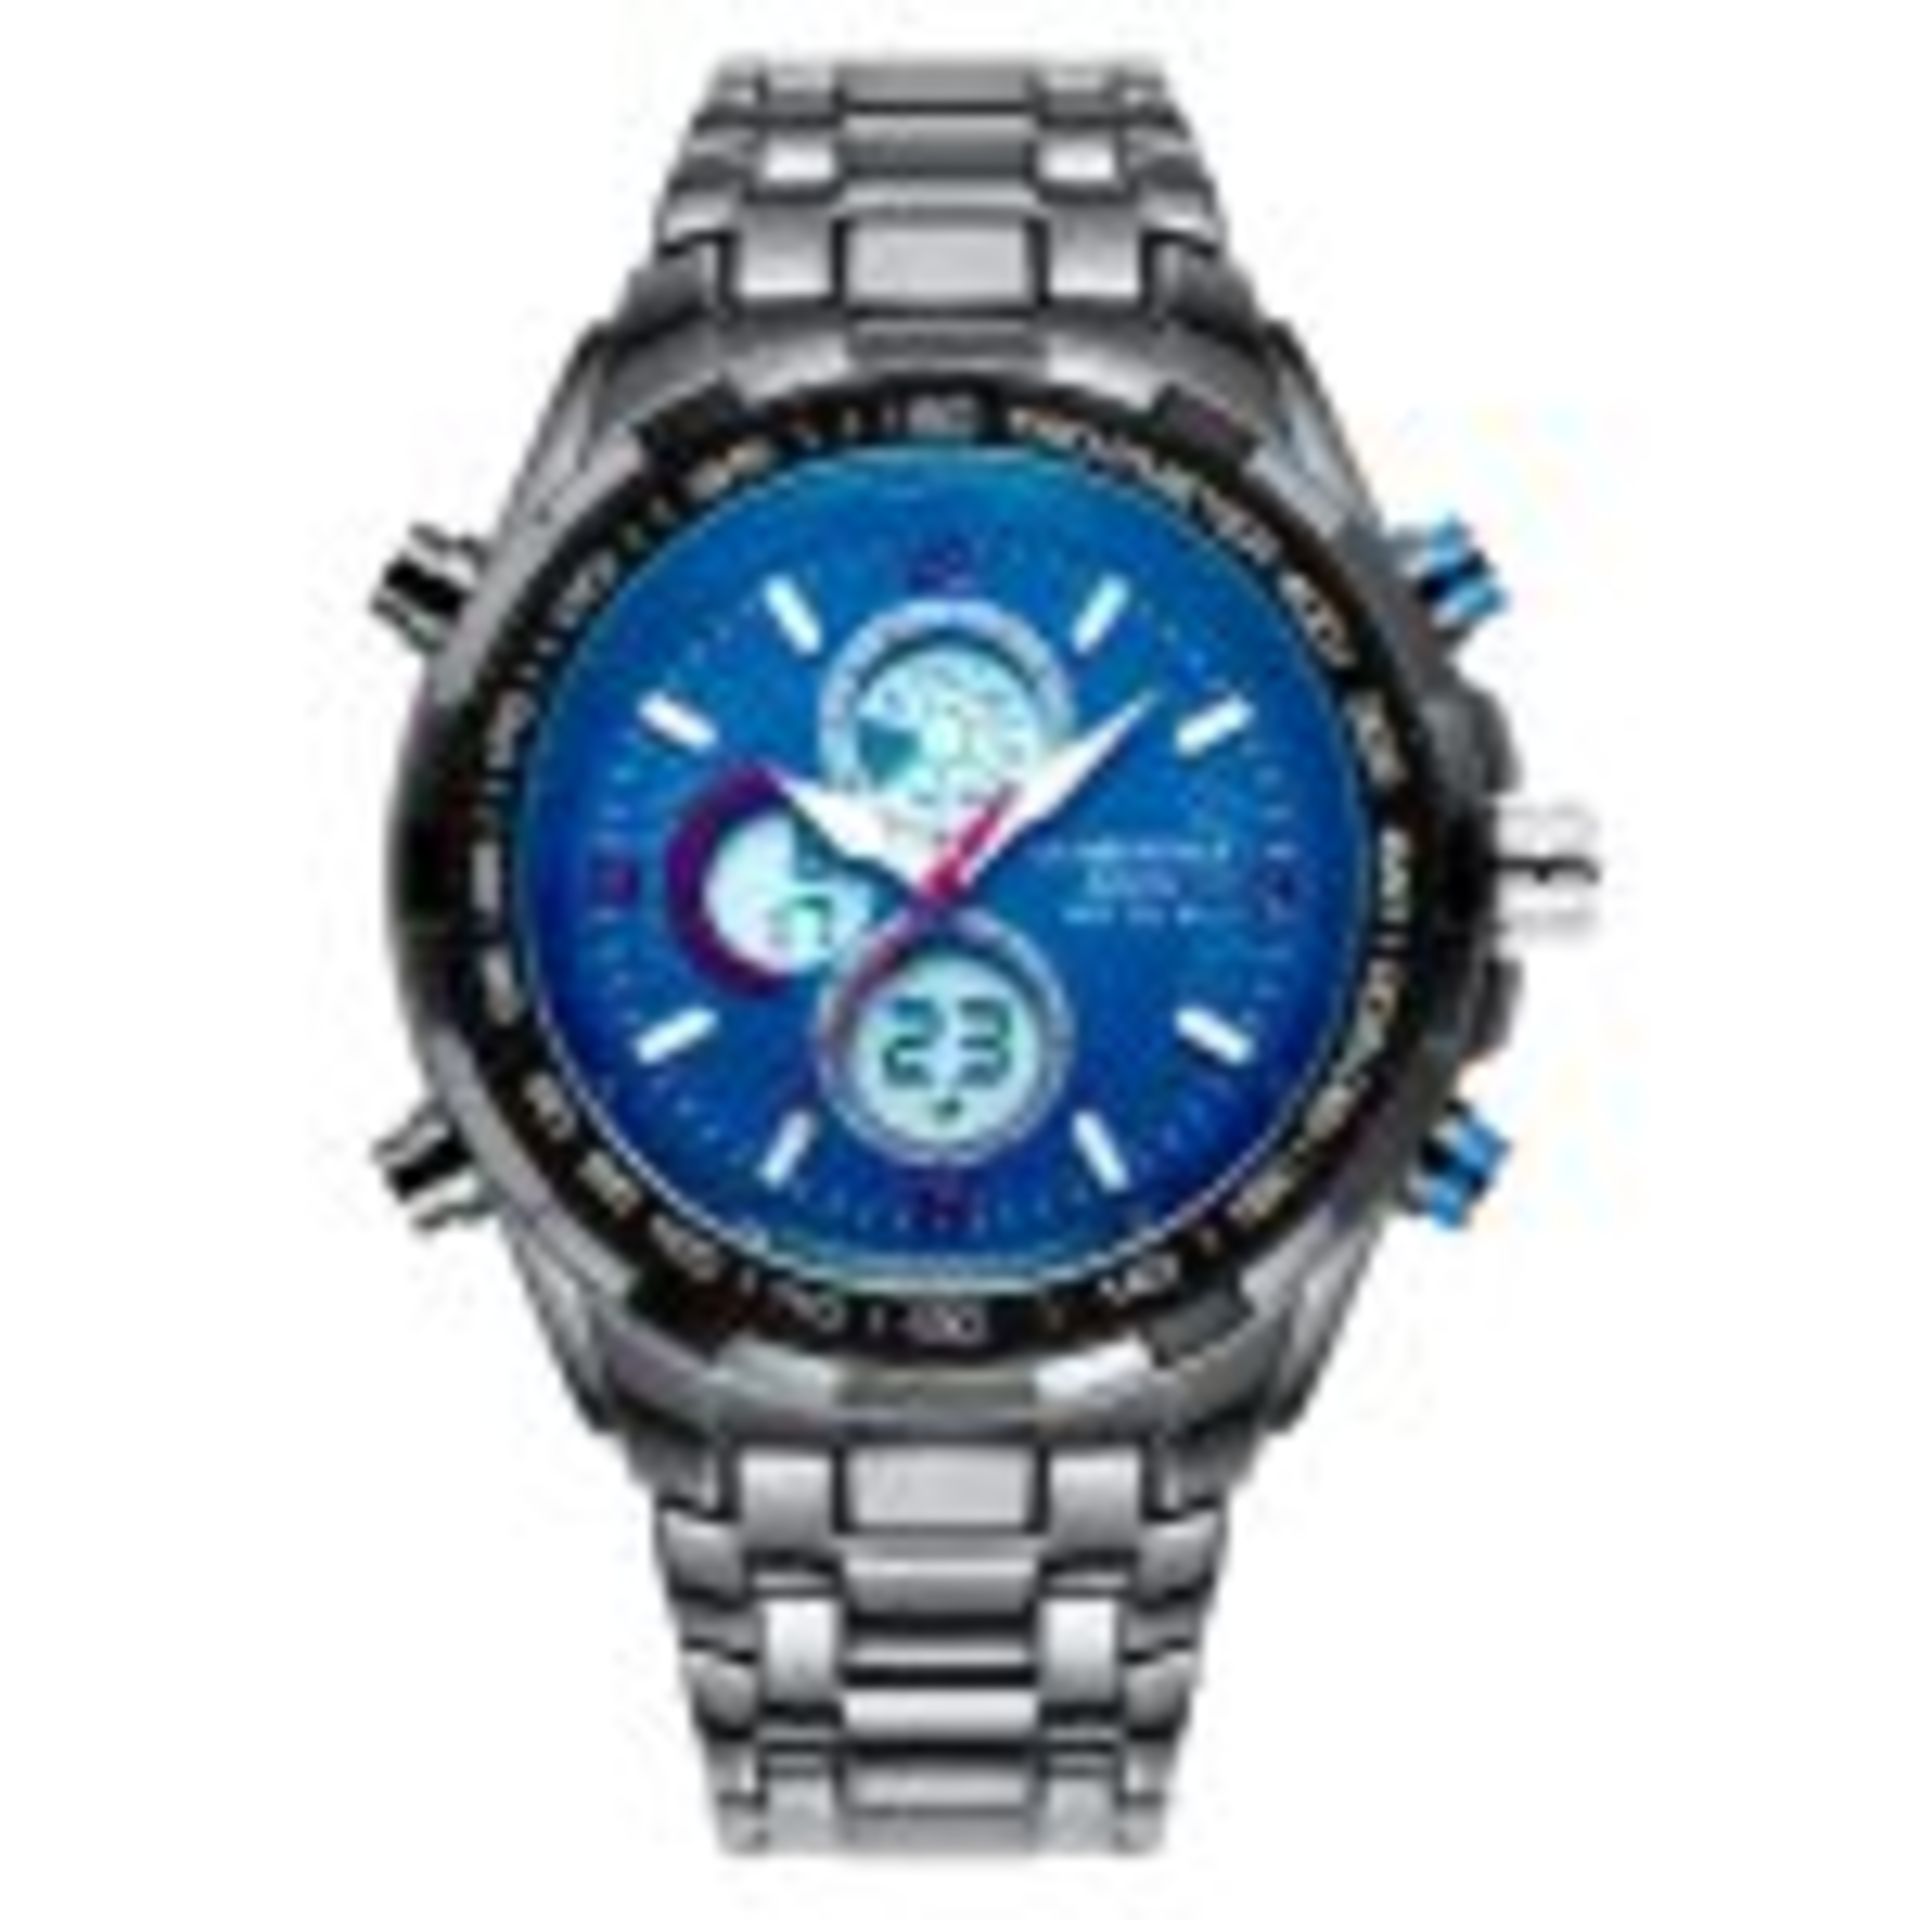 V Brand New Gents Globenfeld Sport watch - Shark Grey Strap - Tinted Glass - SRP £440 X 2 YOUR BID